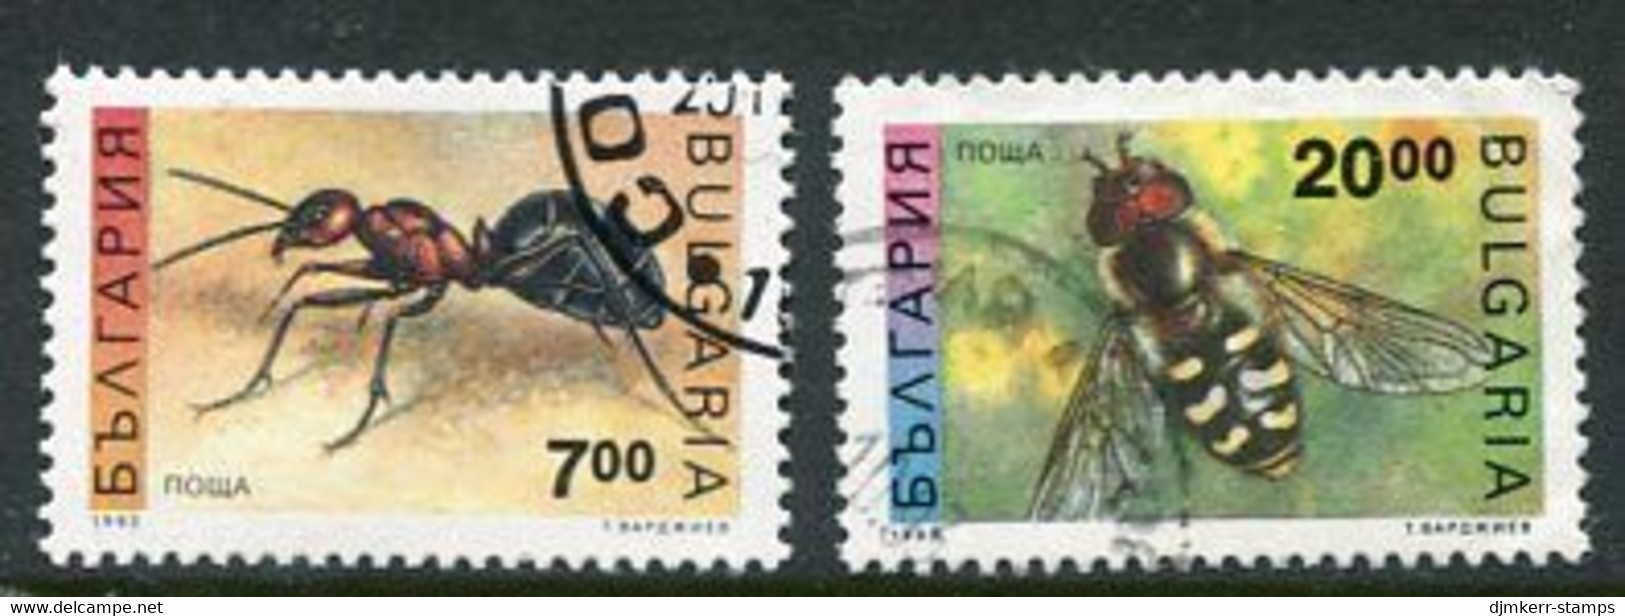 BULGARIA 1992 Insect Definitive 7, 20 L. Used.  Michel 3998-99 - Oblitérés